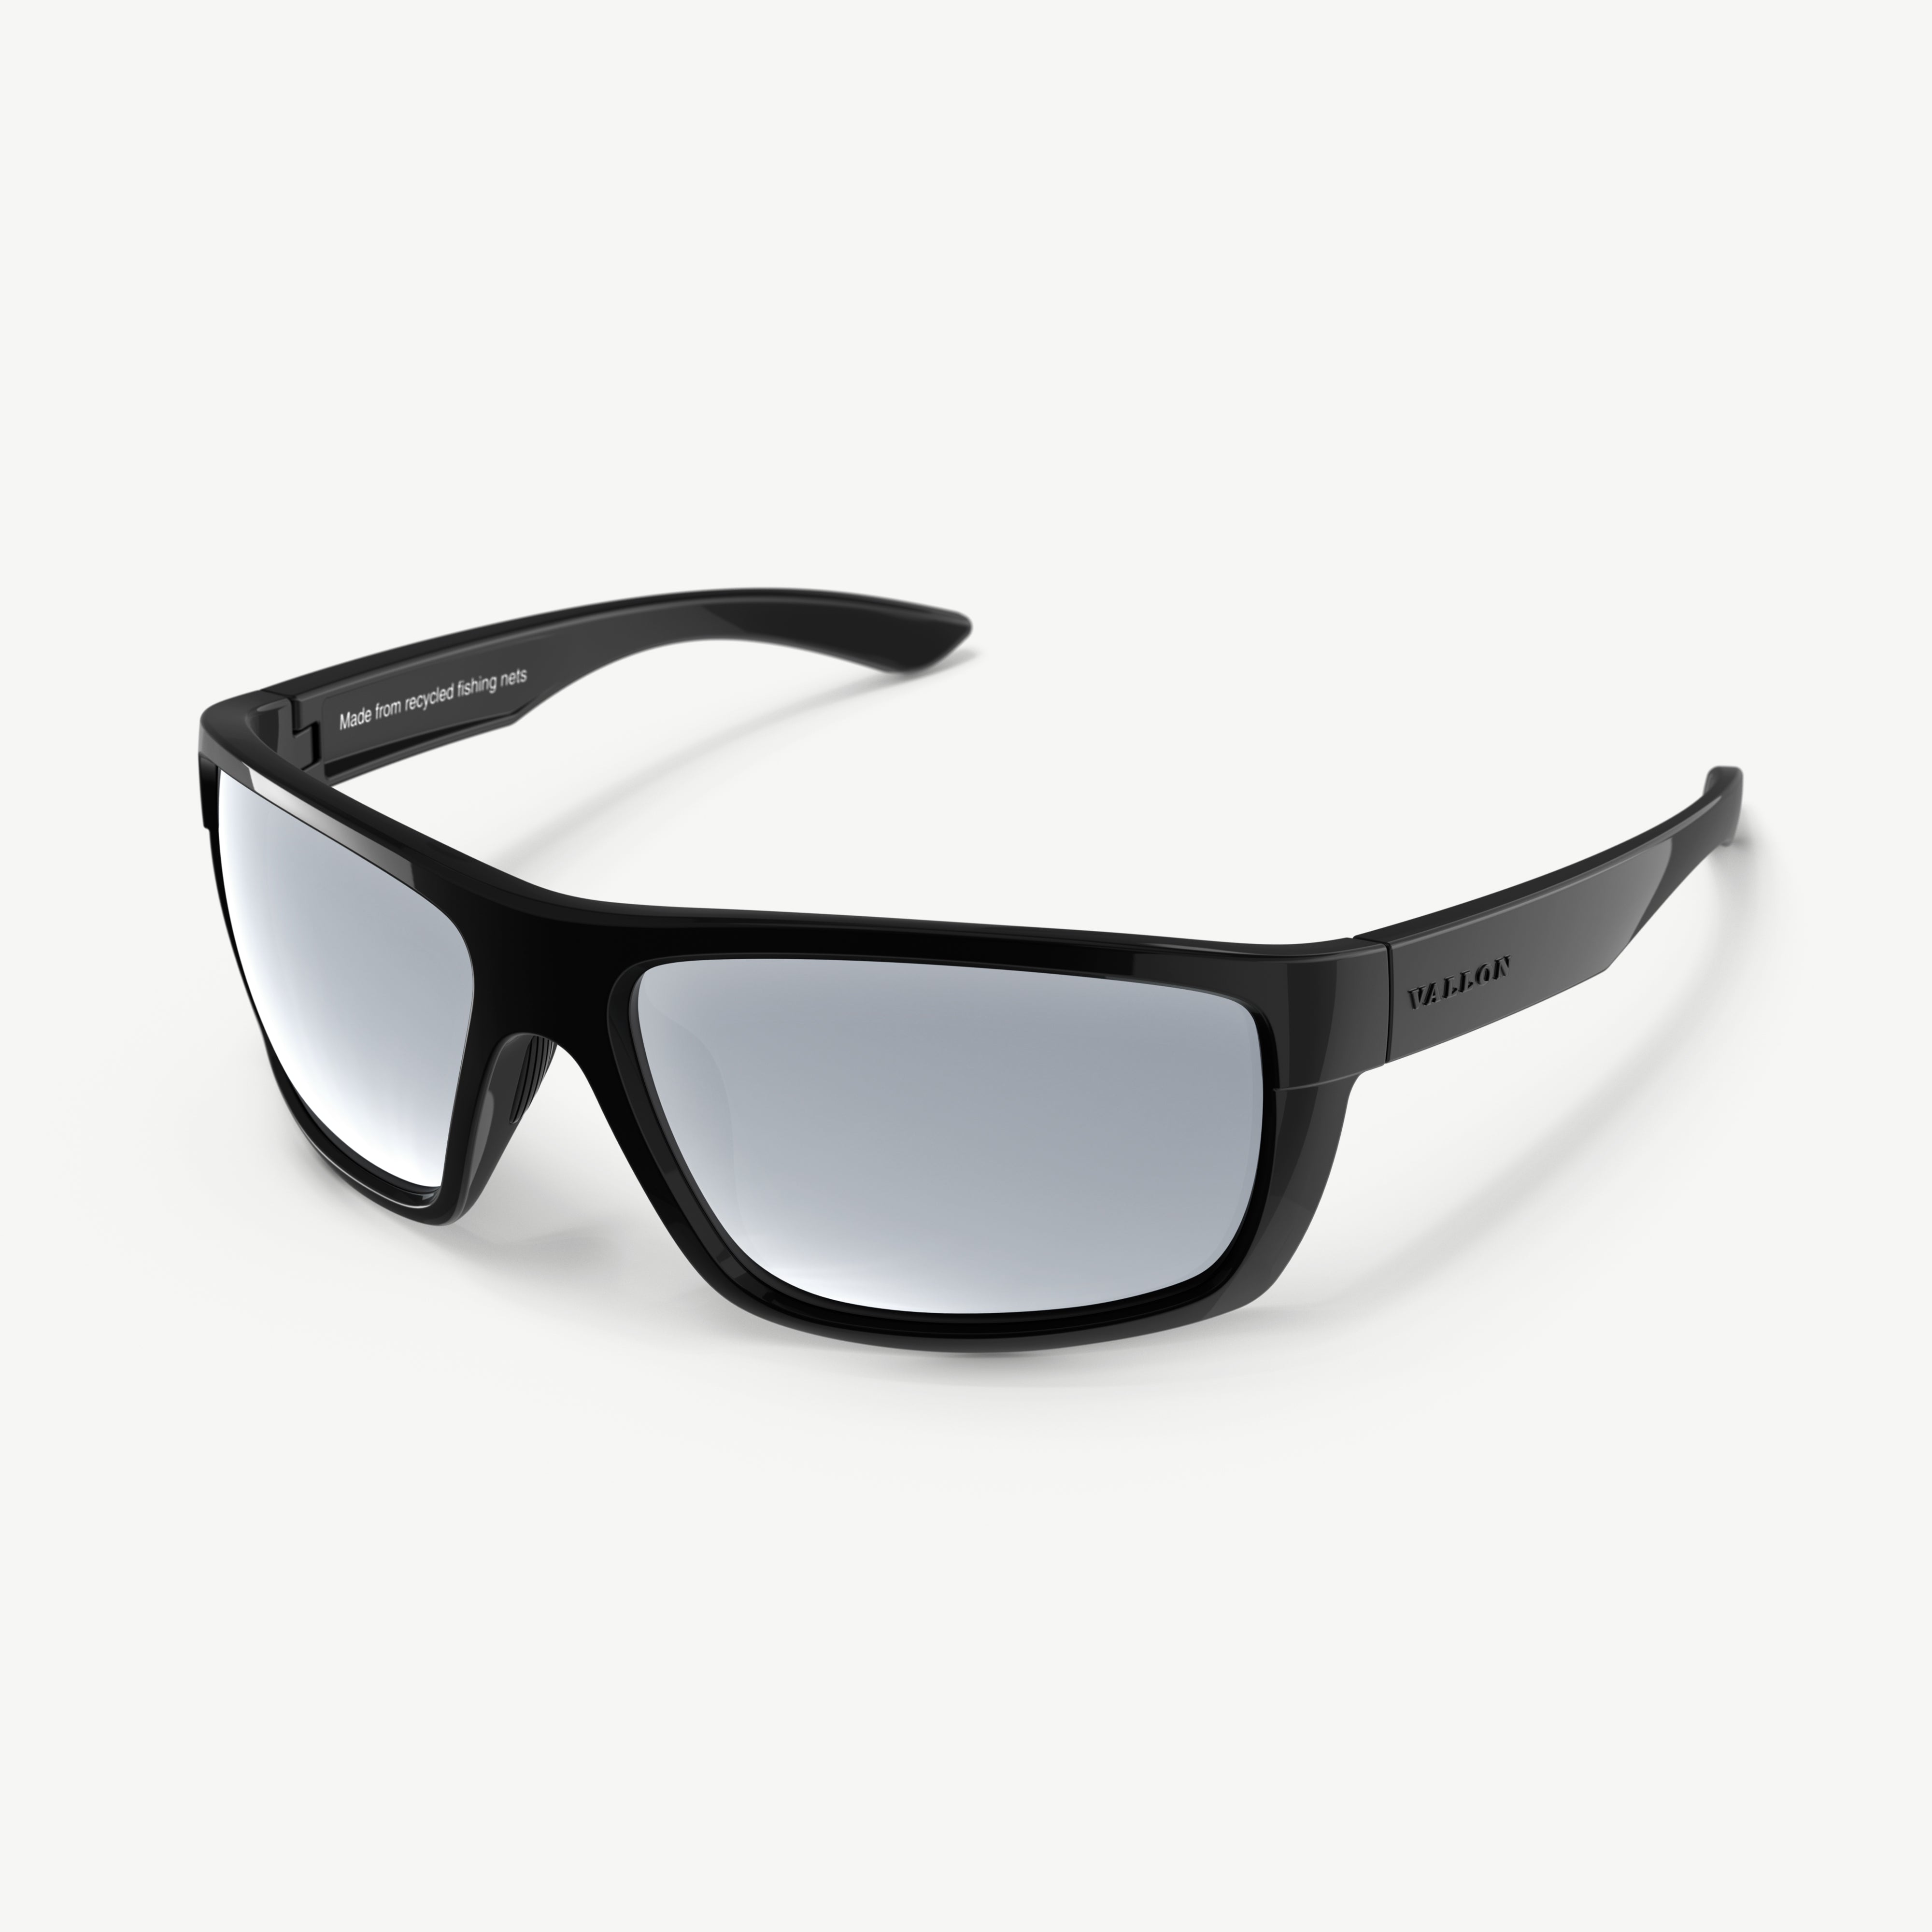 Vallon - Saltwater Revivals - Fishing Sunglasses - Black